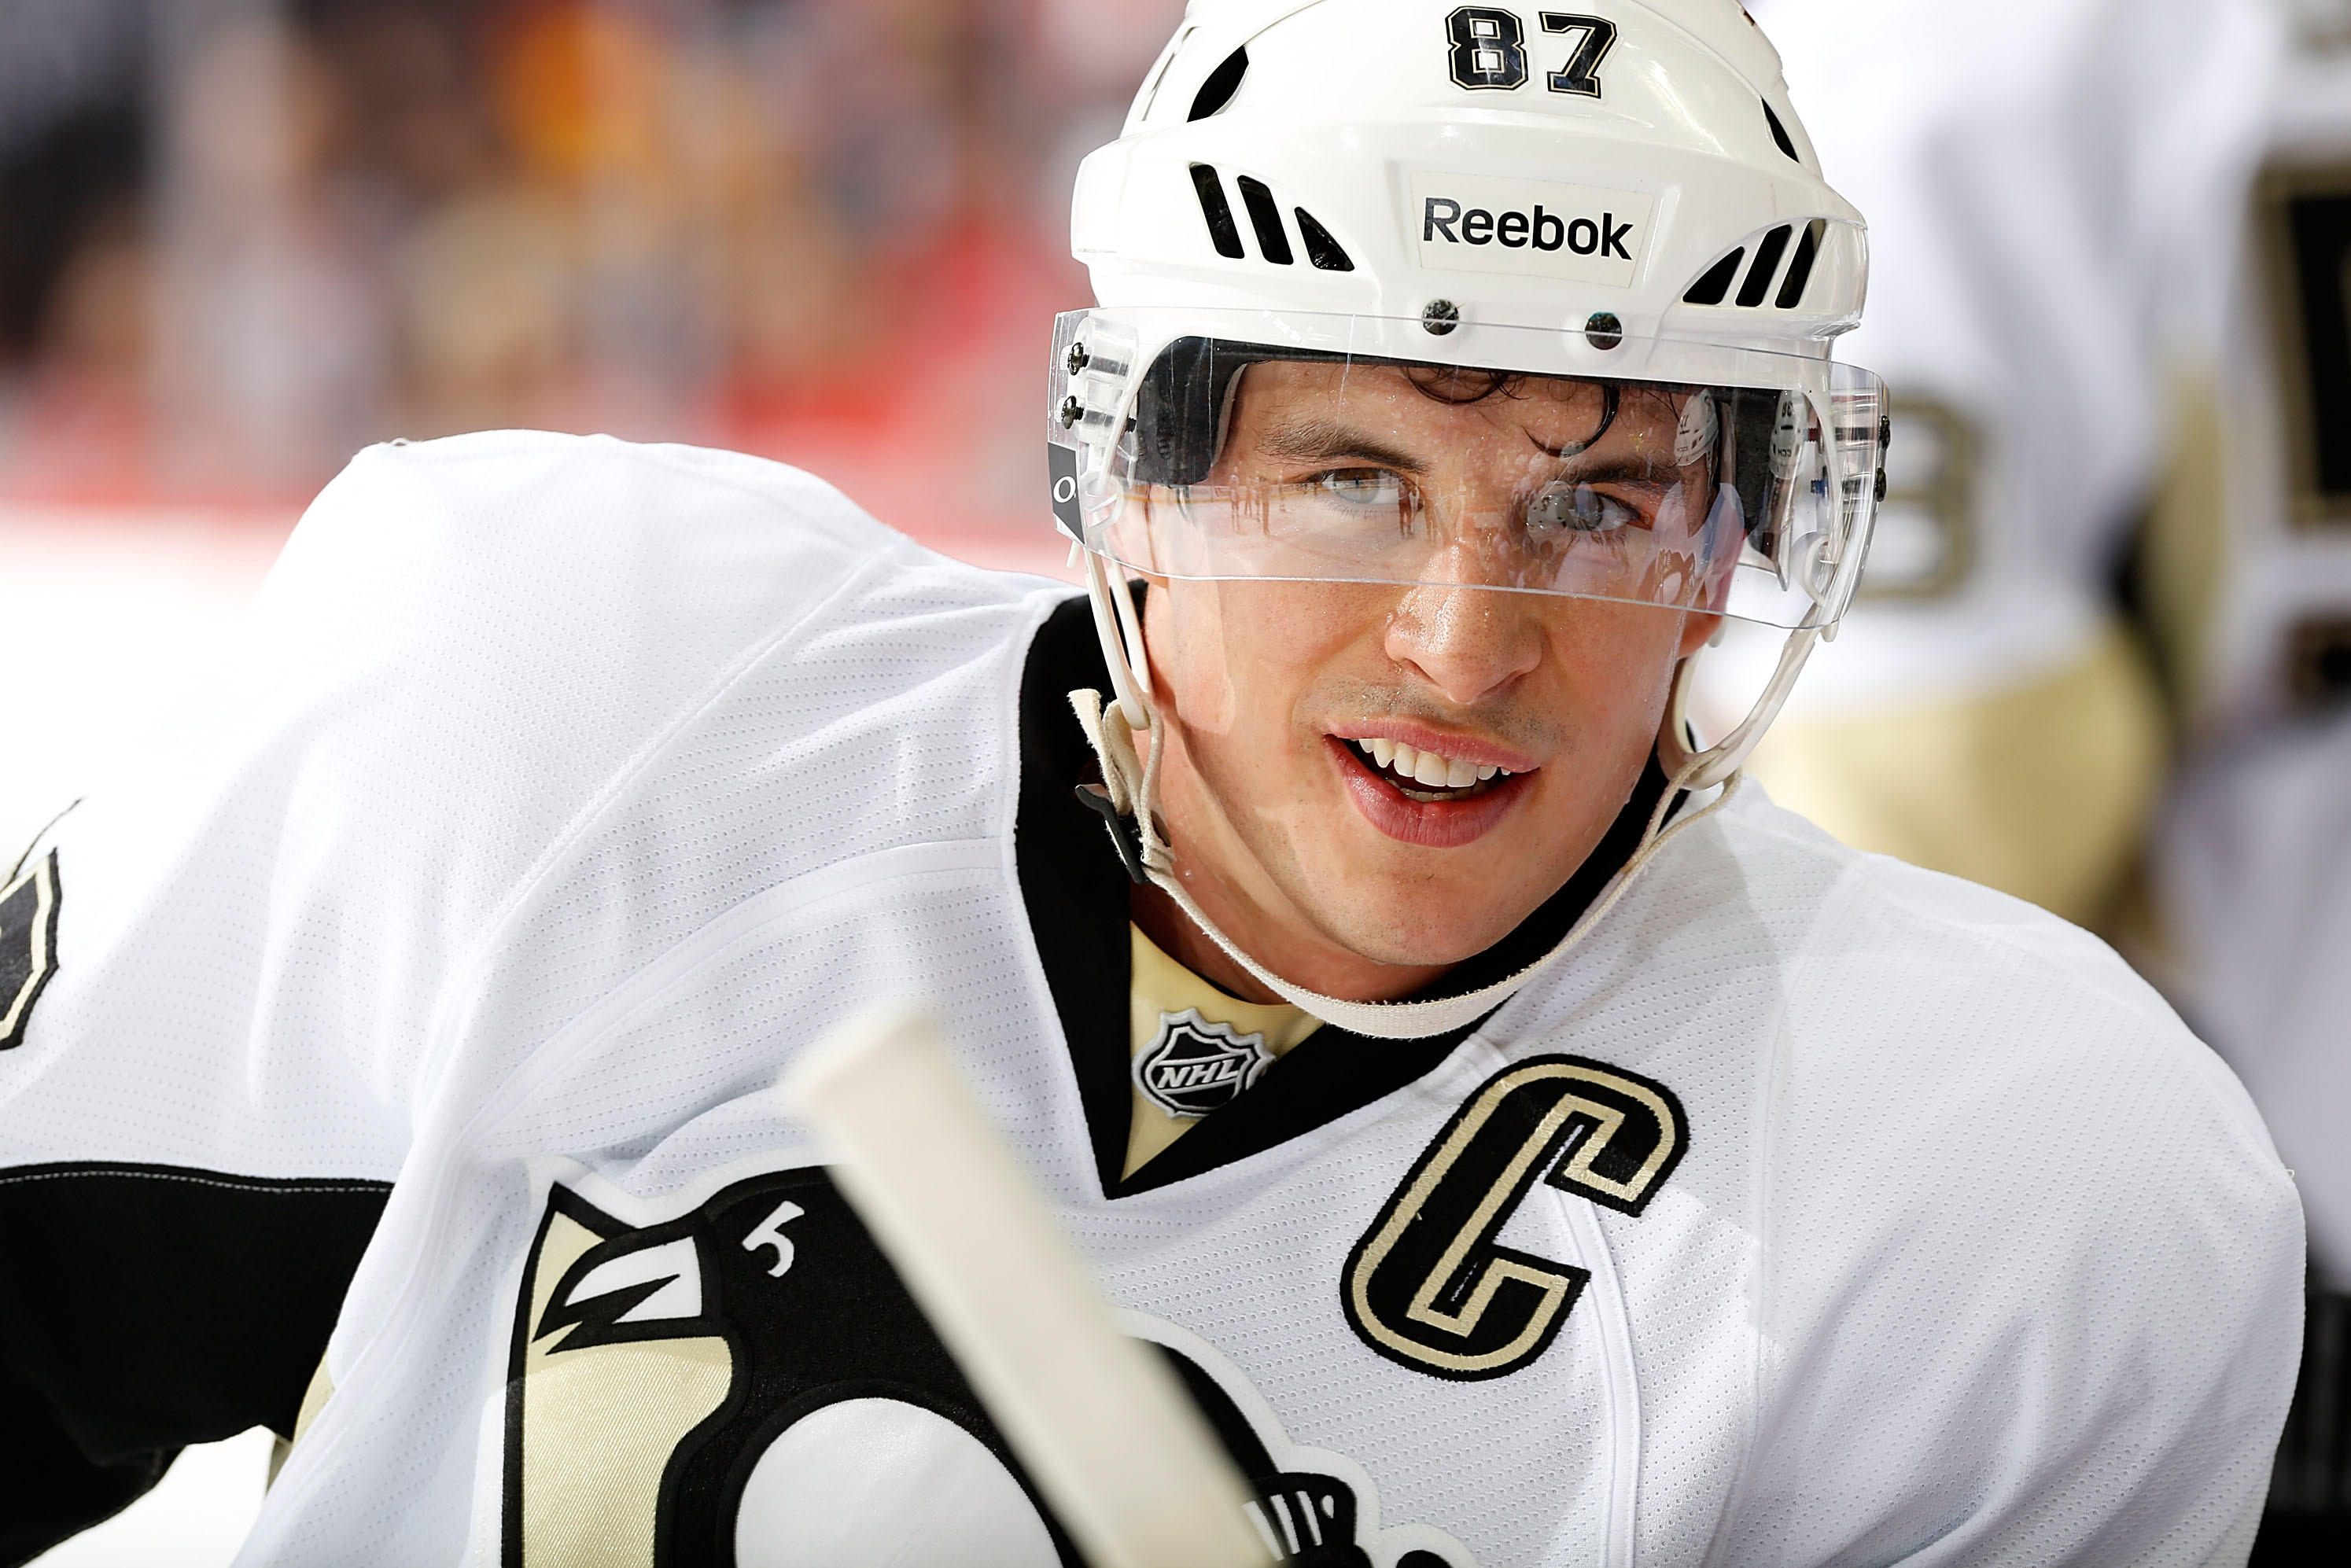 Sidney Crosby Game-Worn Reebok Skates (2013-14)